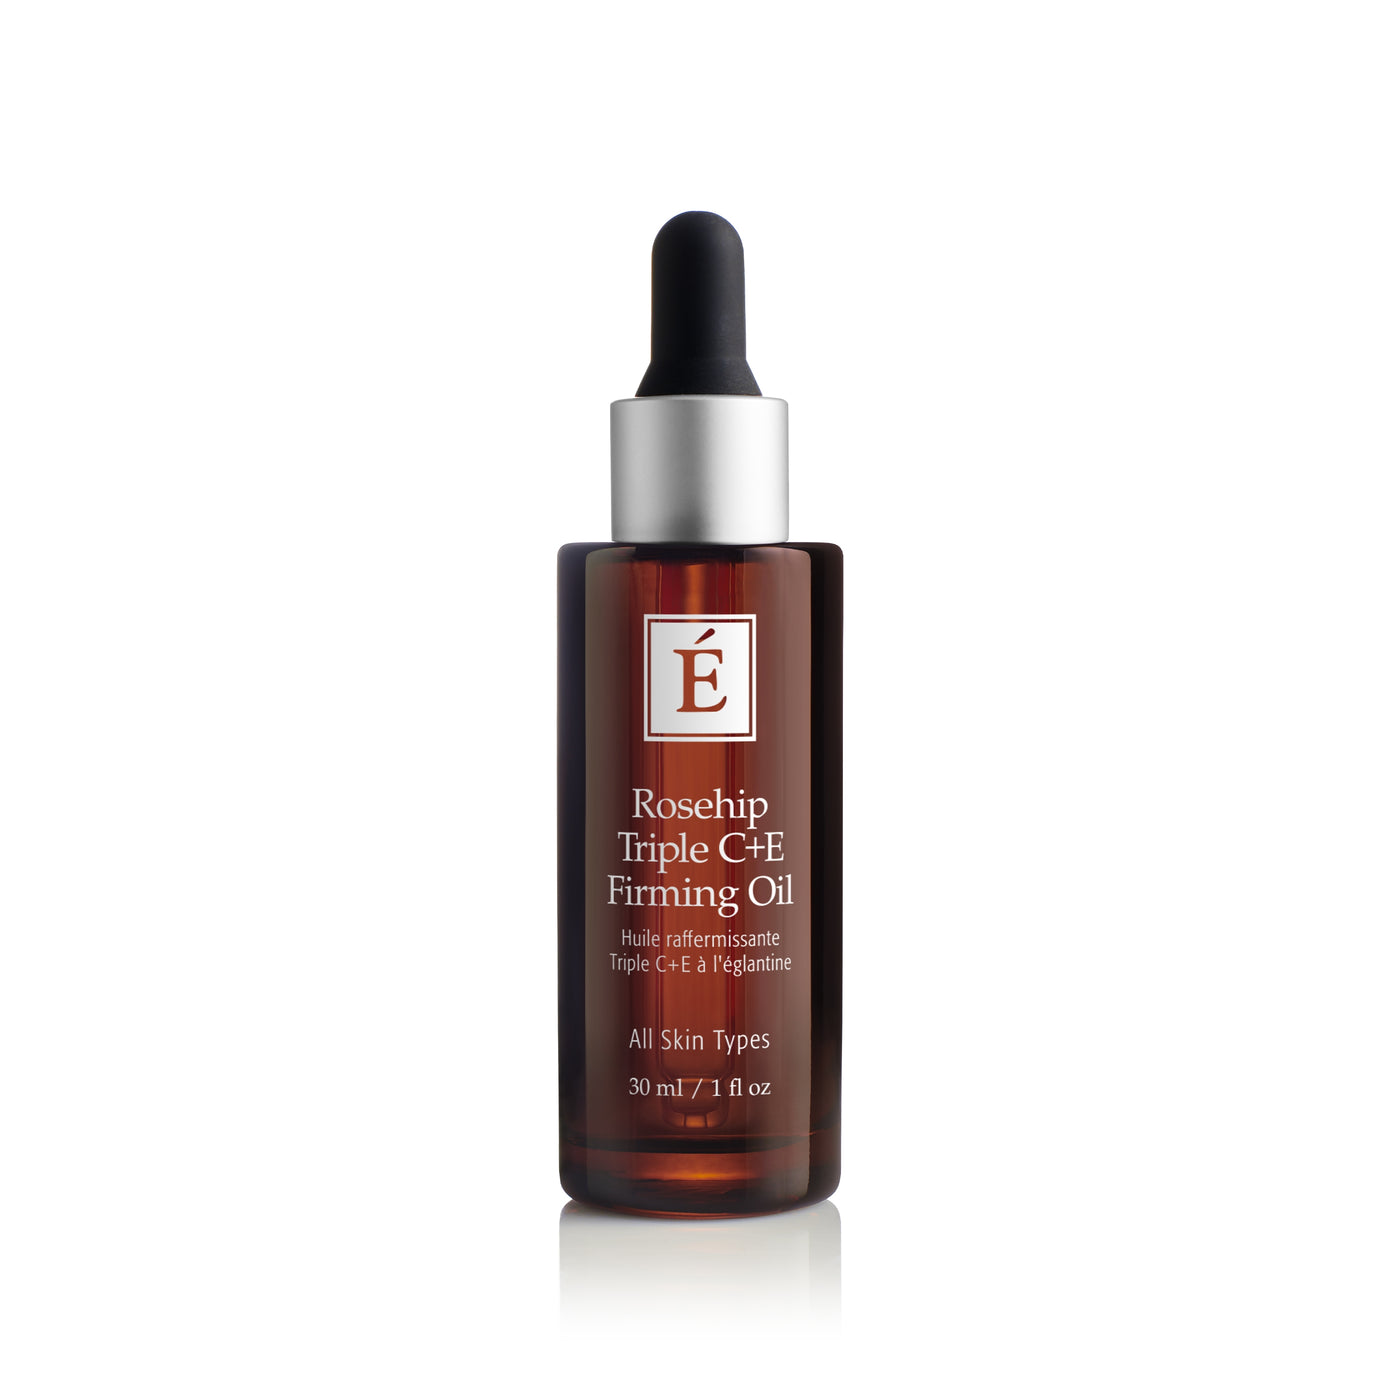 Eminence Organics Rosehip Triple C+E Firming Oil - Radiance Clean Beauty